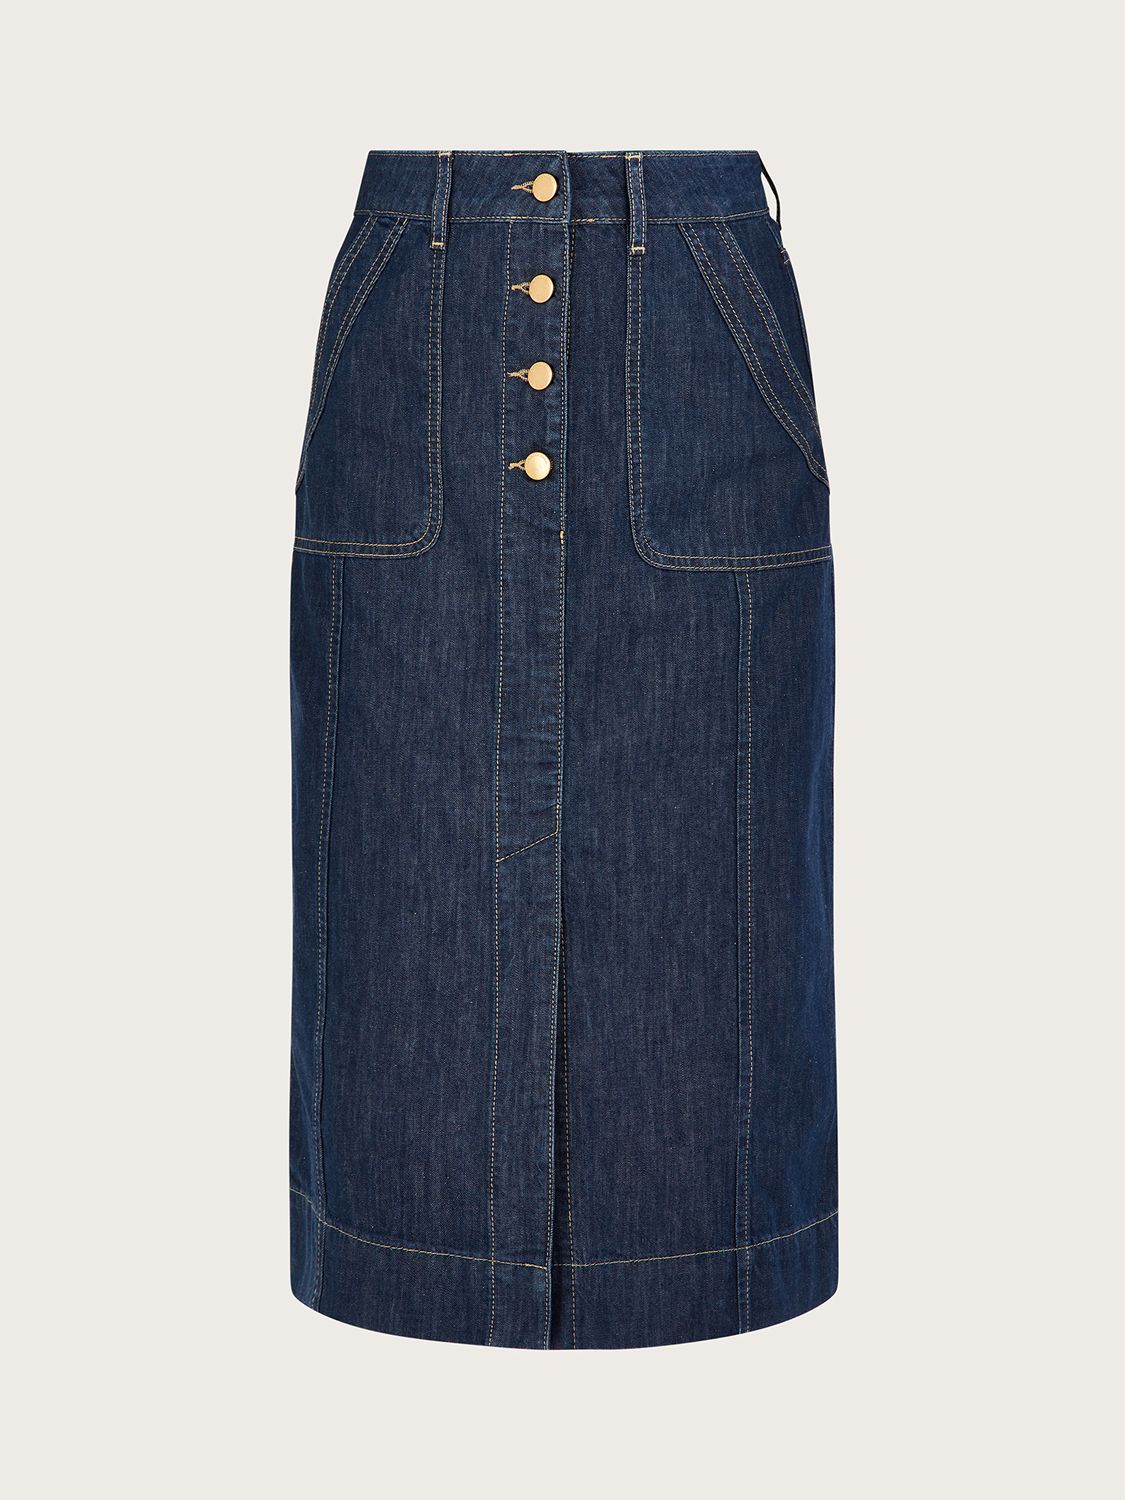 Monsoon Denim Button Front Skirt, Blue at John Lewis & Partners